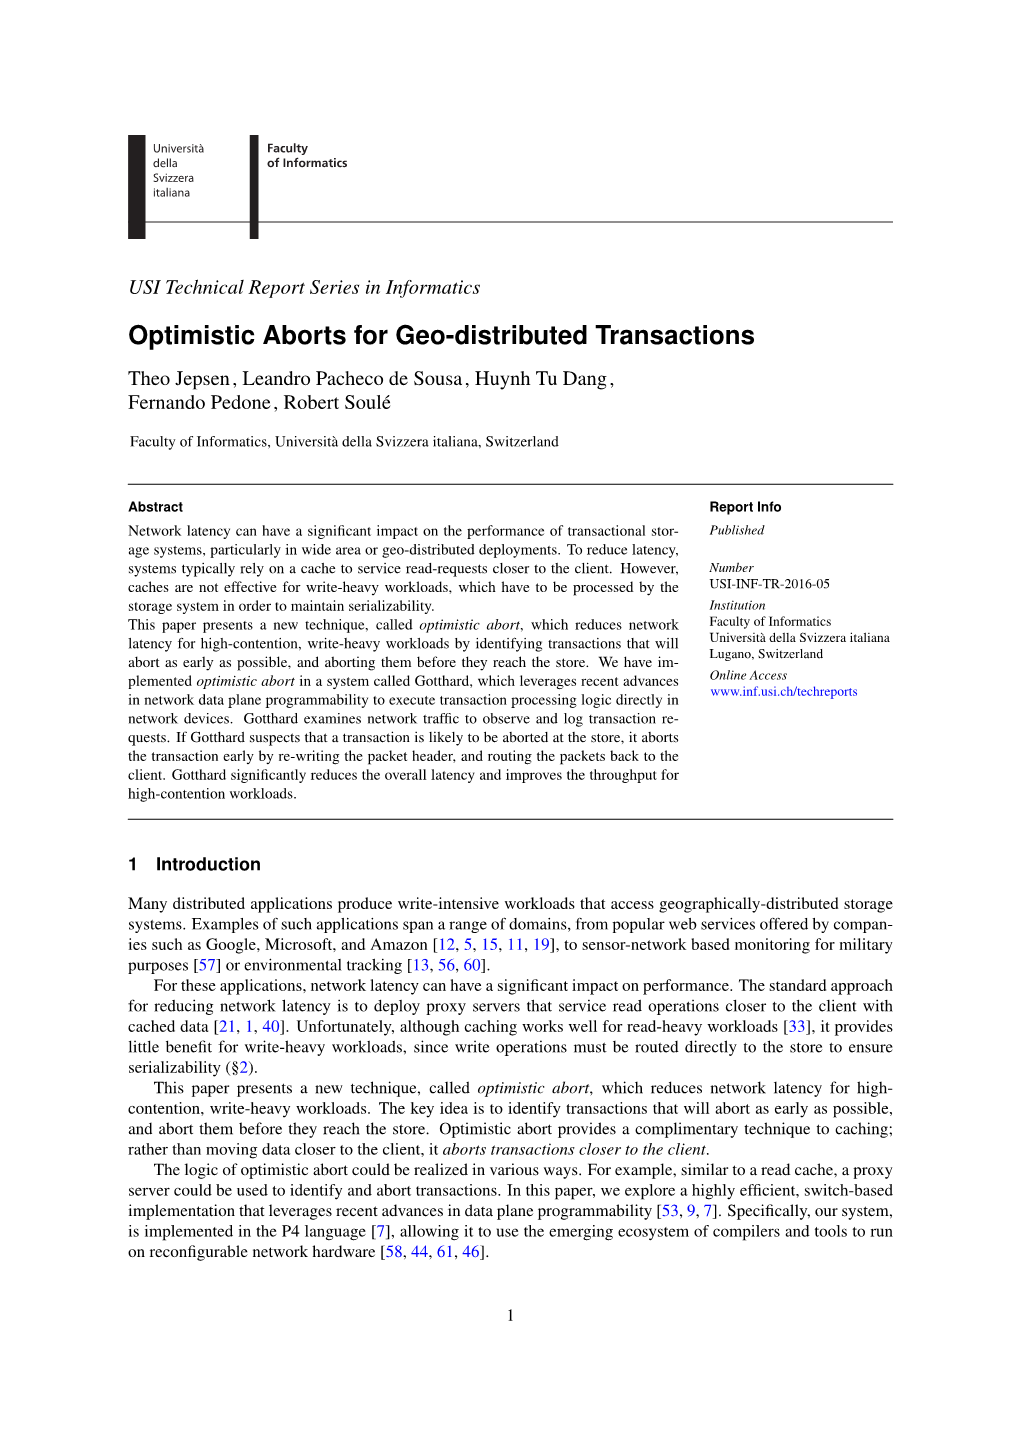 Optimistic Aborts for Geo-Distributed Transactions Theo Jepsen, Leandro Pacheco De Sousa, Huynh Tu Dang, Fernando Pedone, Robert Soulé